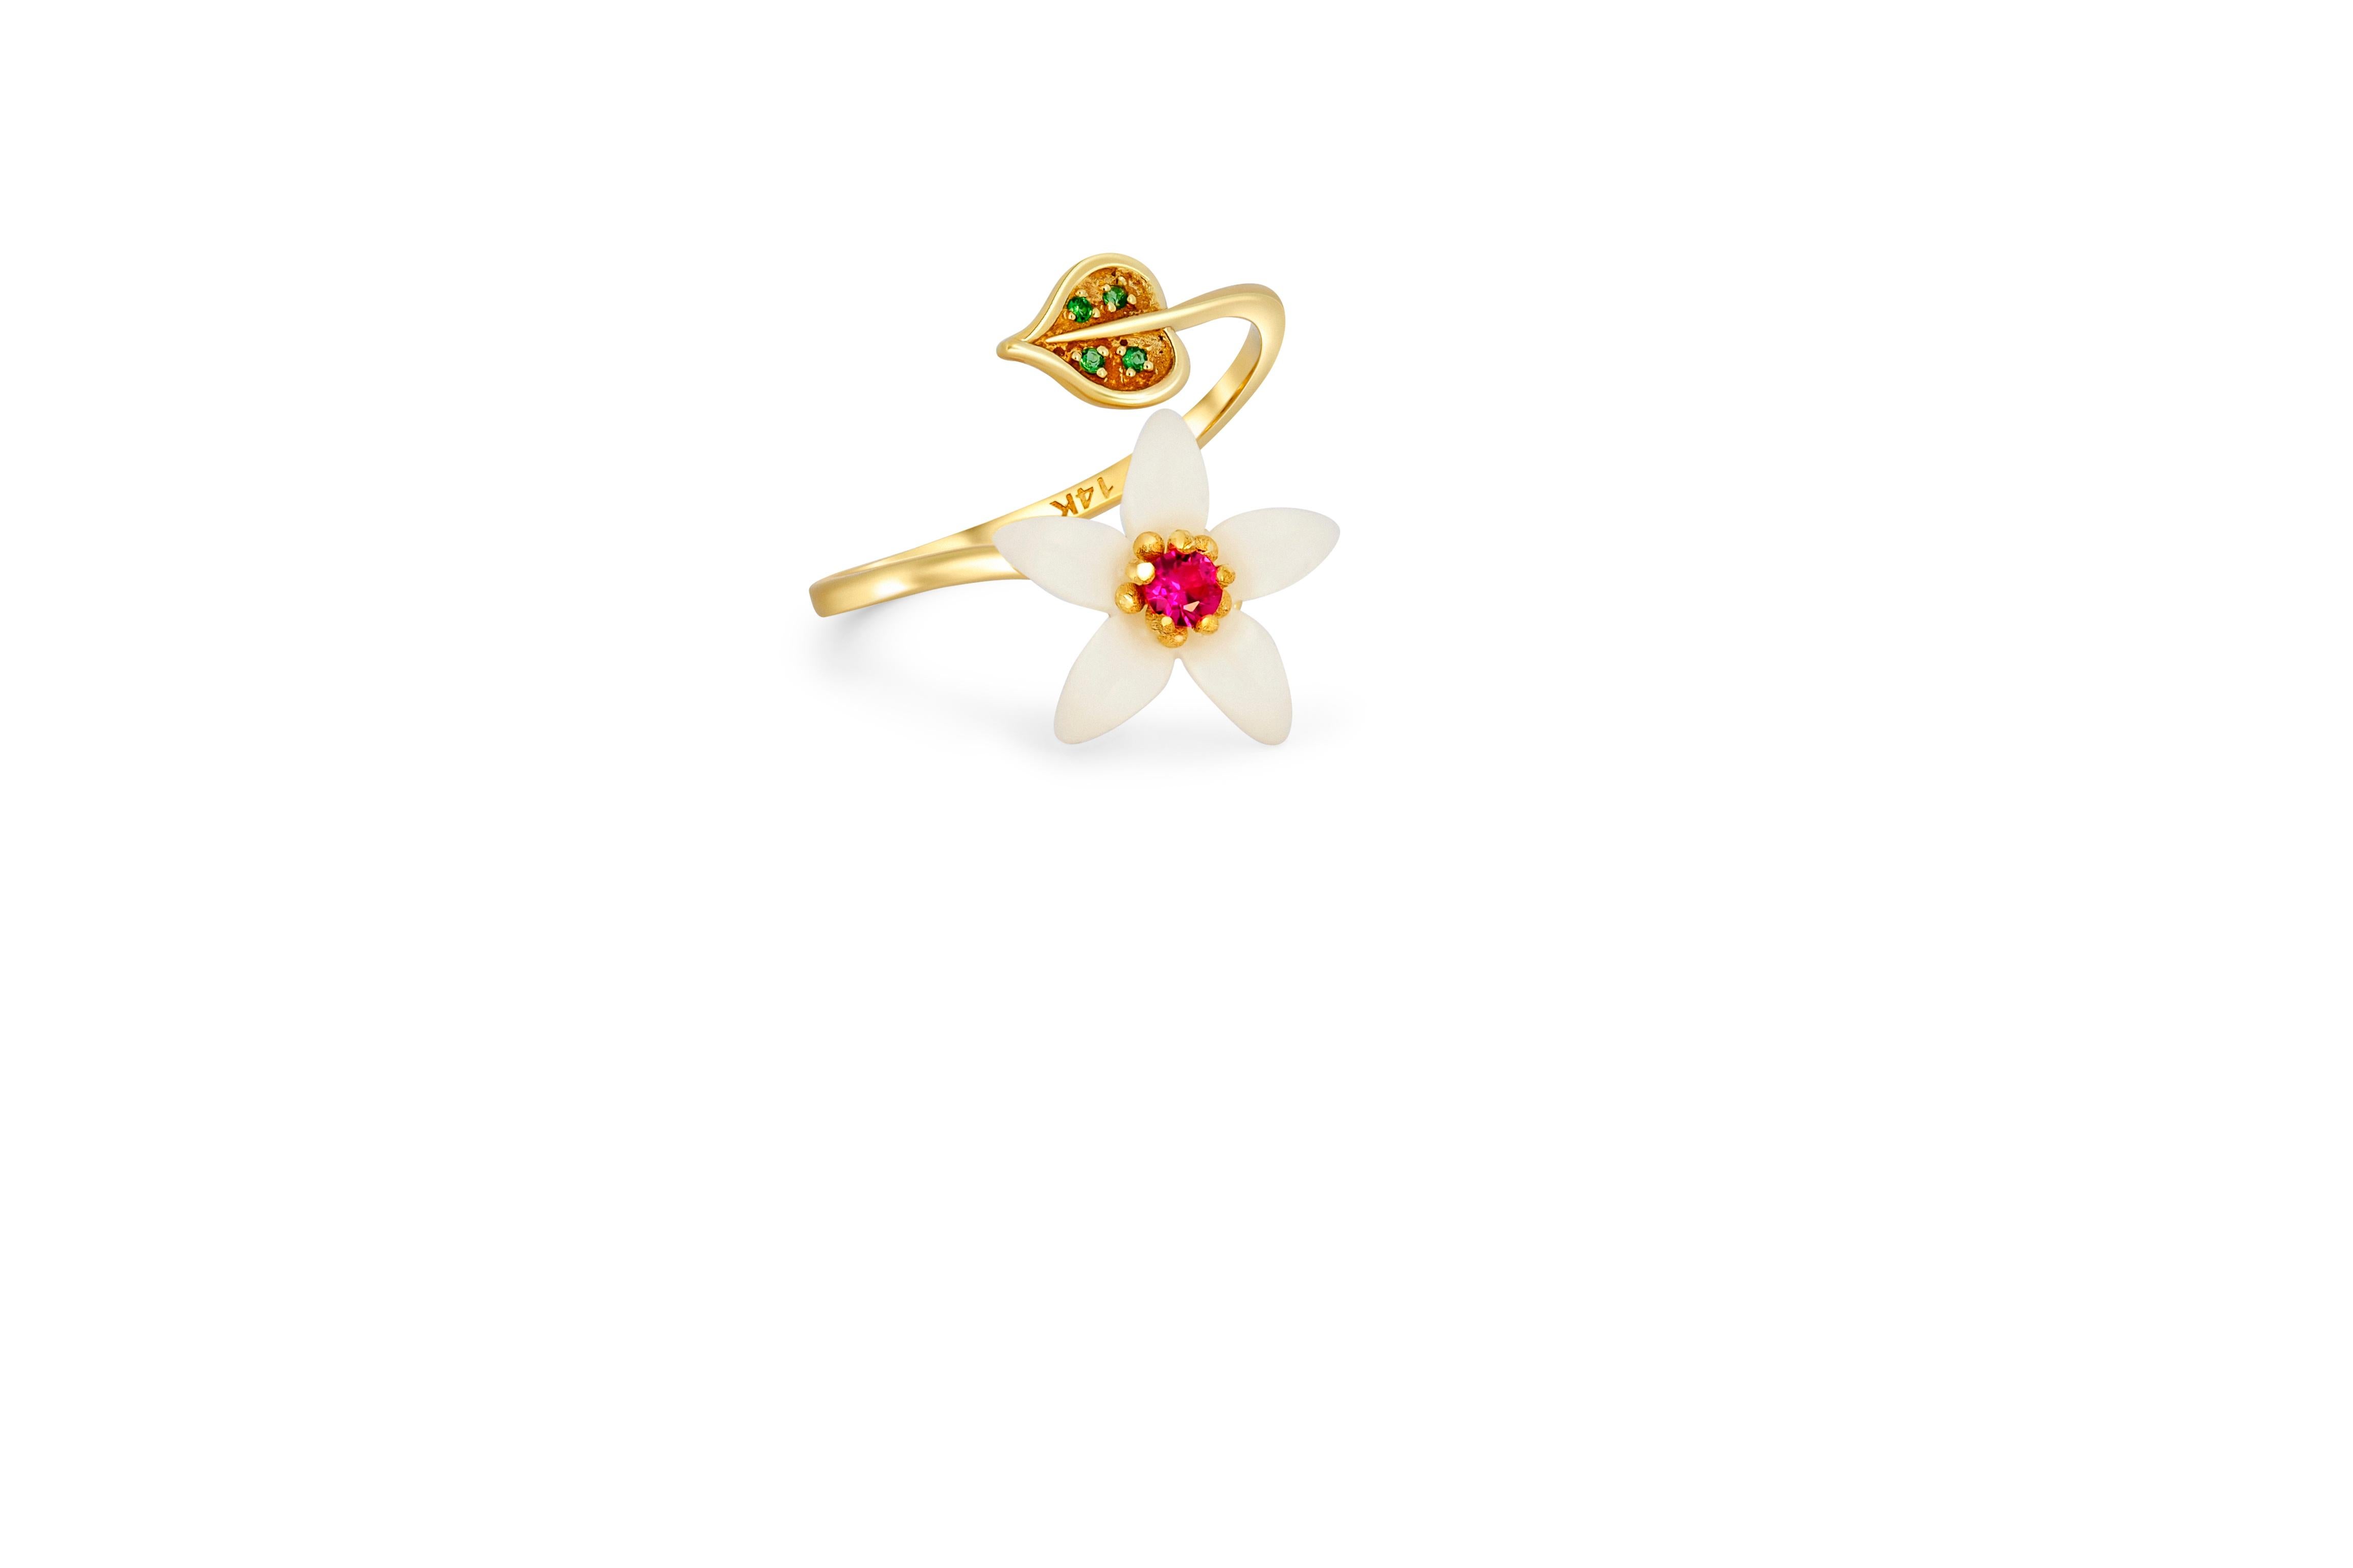 For Sale:  Carved Flower 14k ring with gemstones. 6